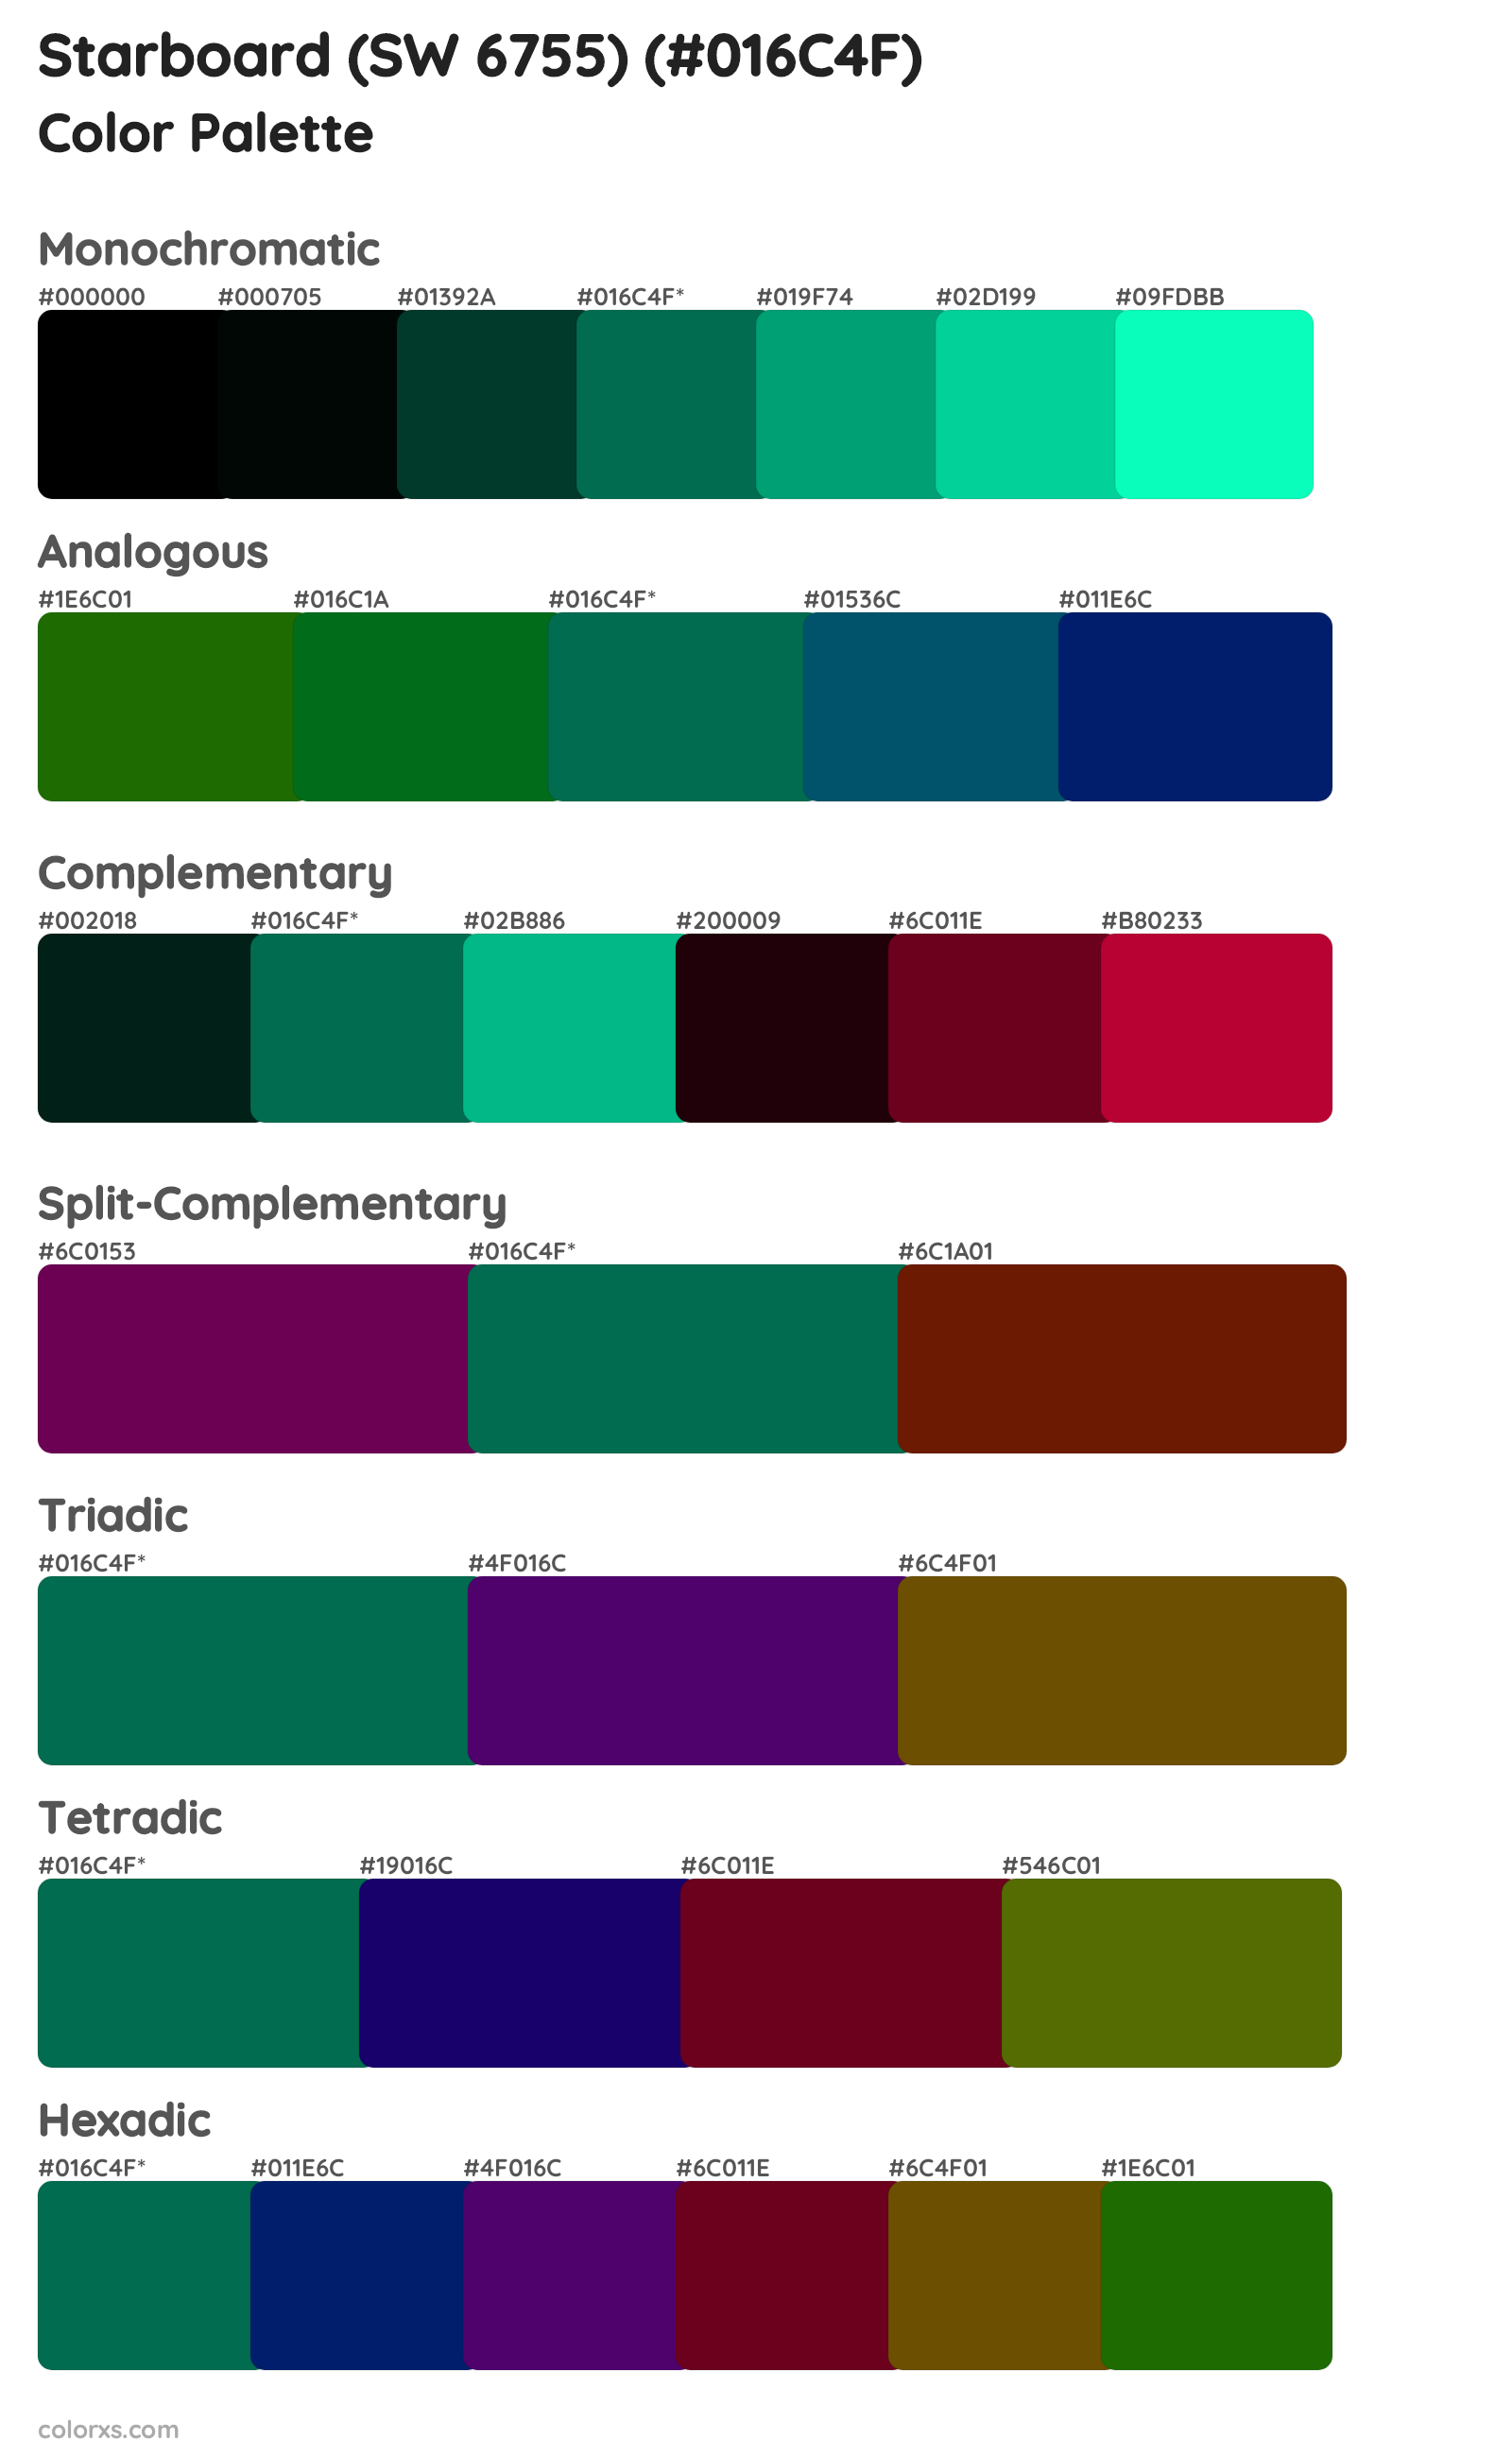 Starboard (SW 6755) Color Scheme Palettes